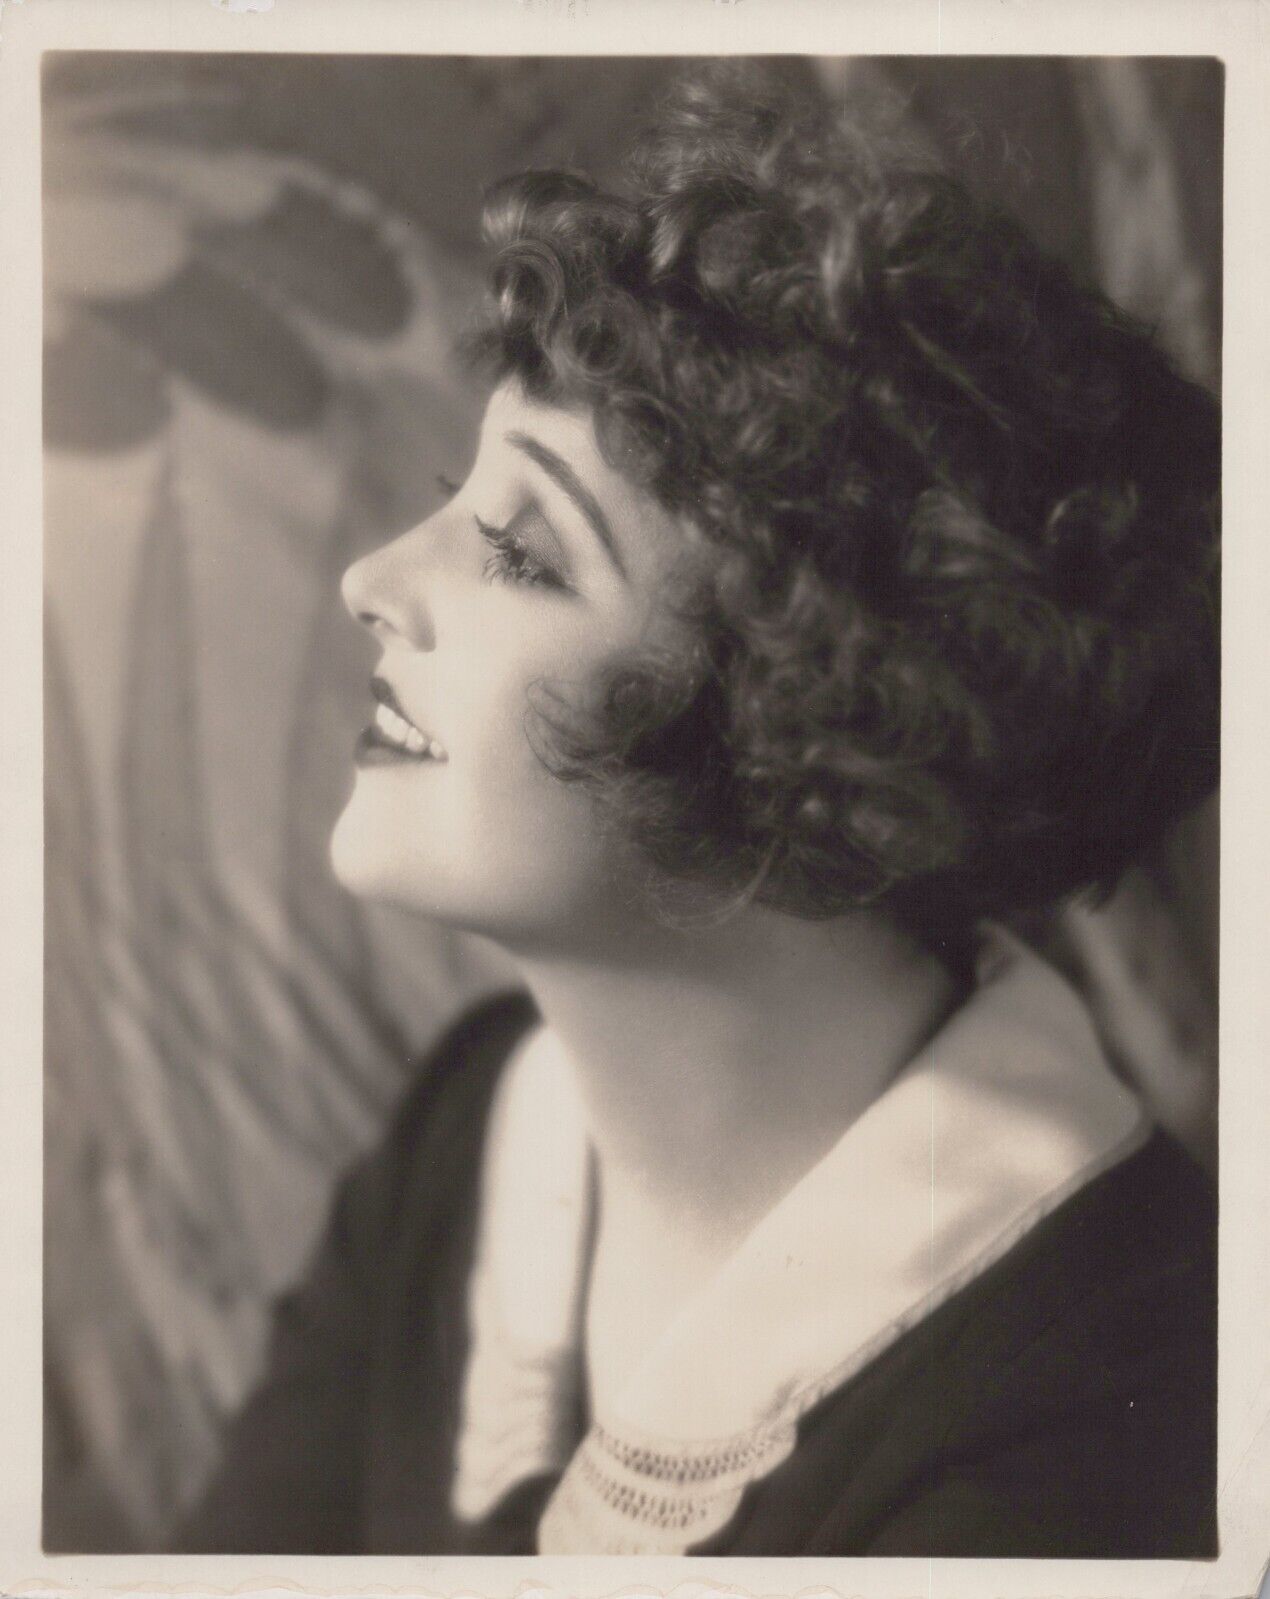 Madge Bellamy (1920s) ❤🎬 Stunning Portrait - Vintage Photo by Hommell K 206